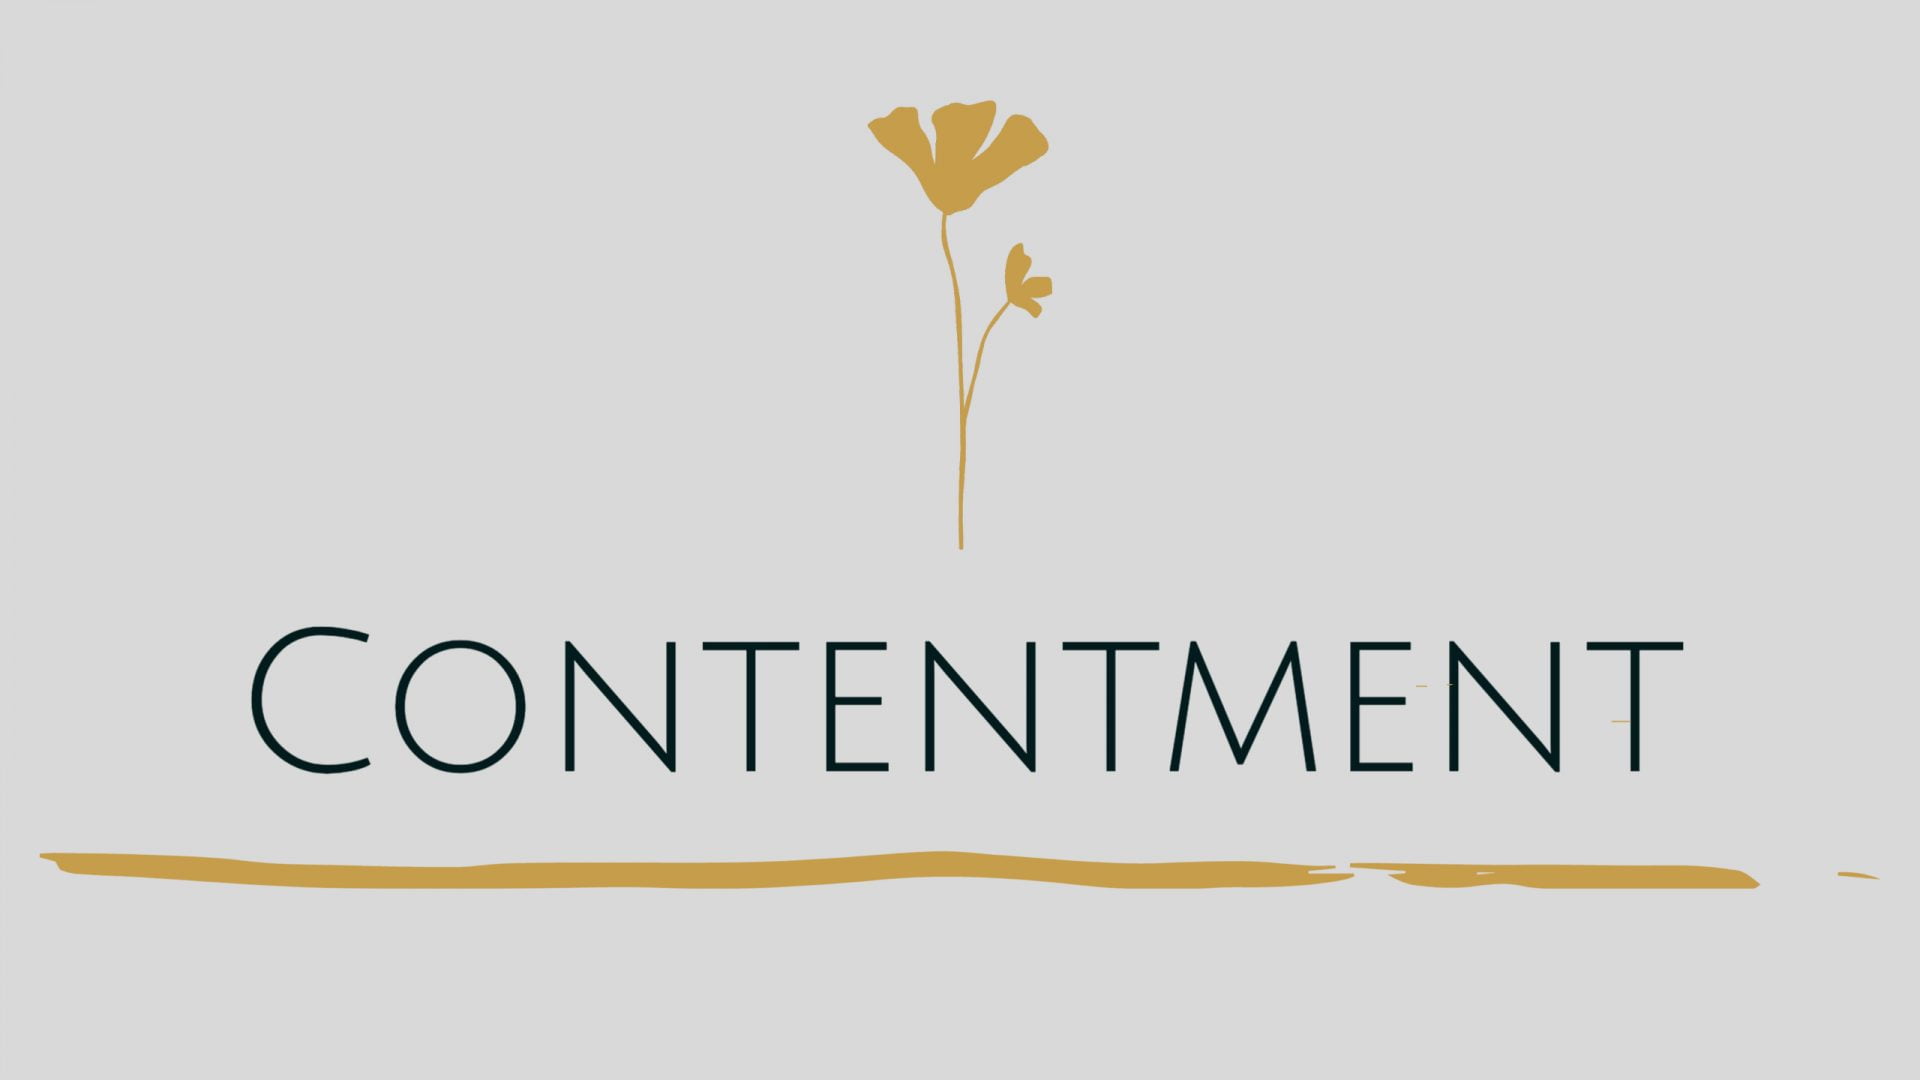 Christian Contentment